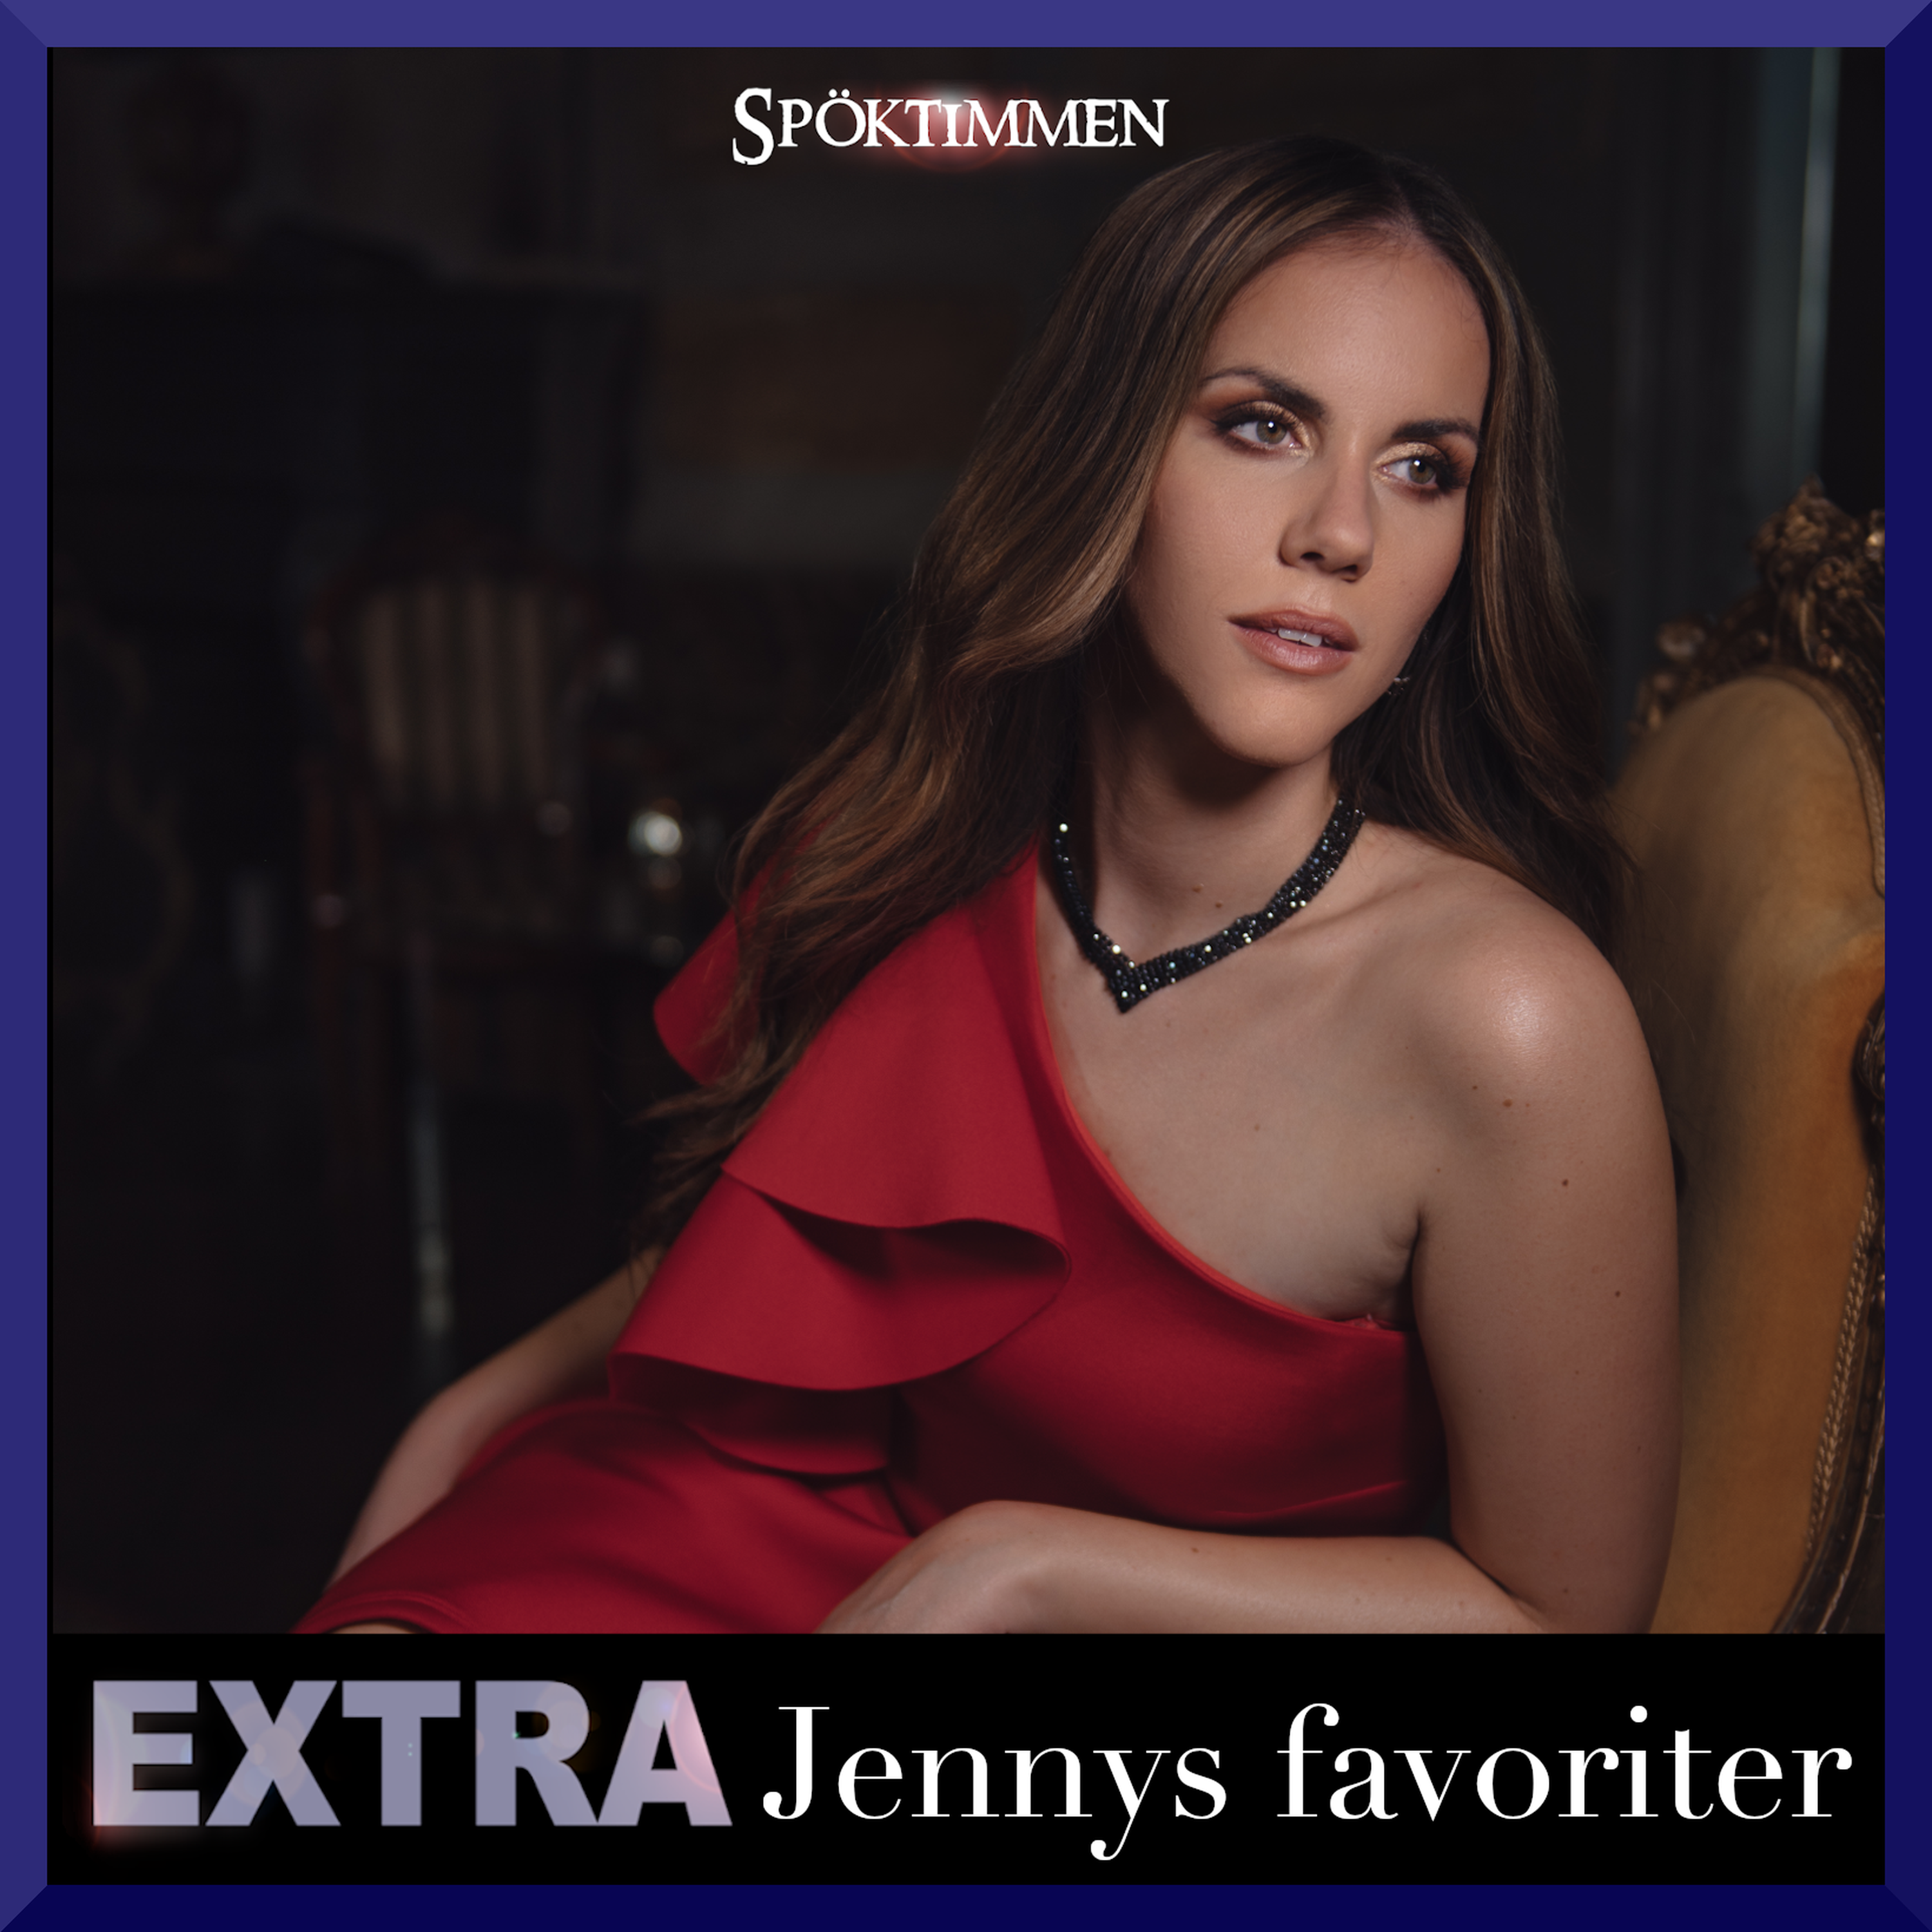 EXTRA: Jennys favoriter